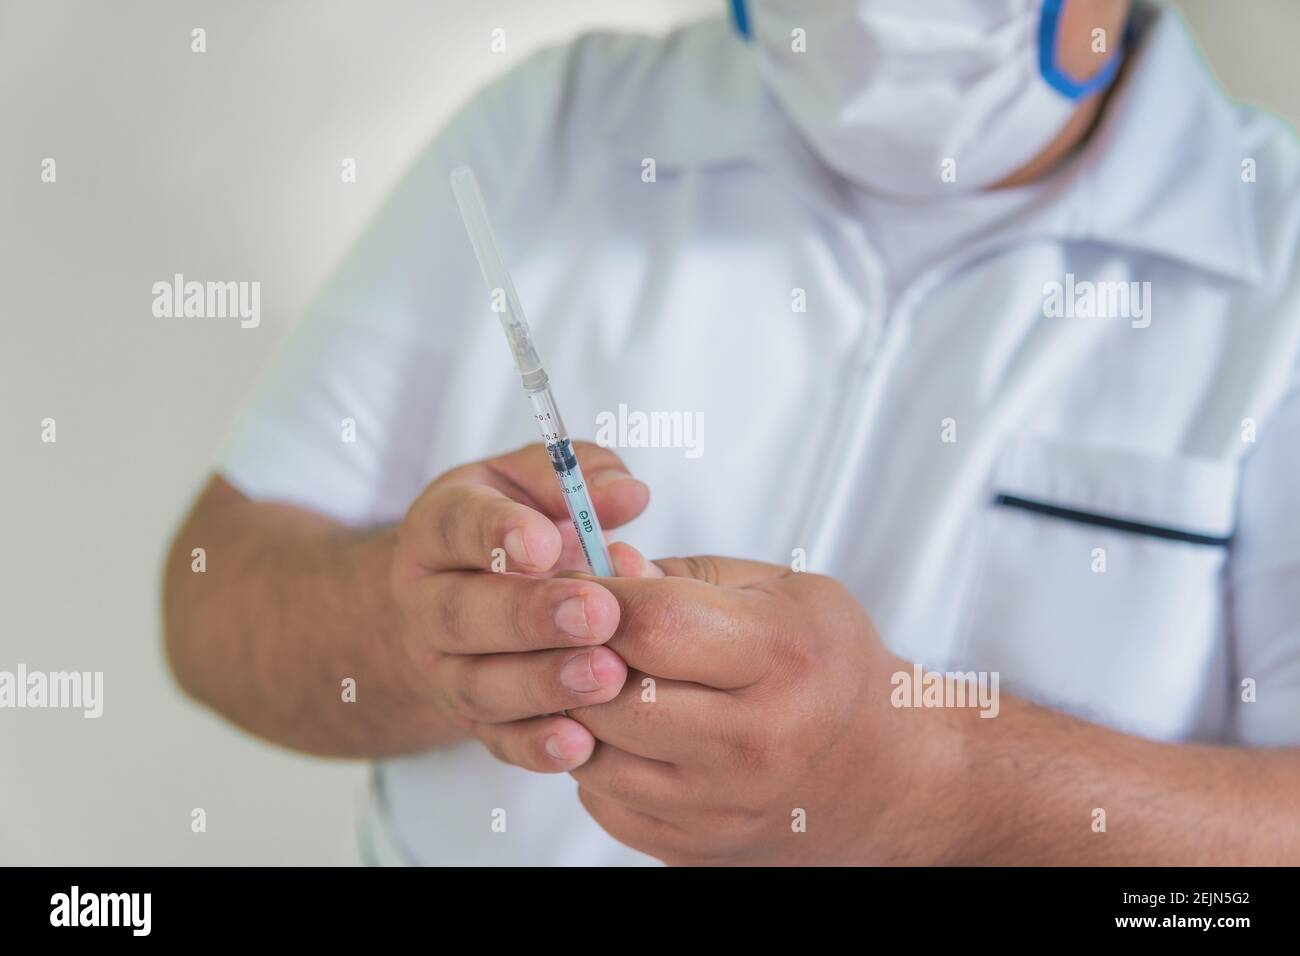 close-up sample of a medical syringe Stock Photo